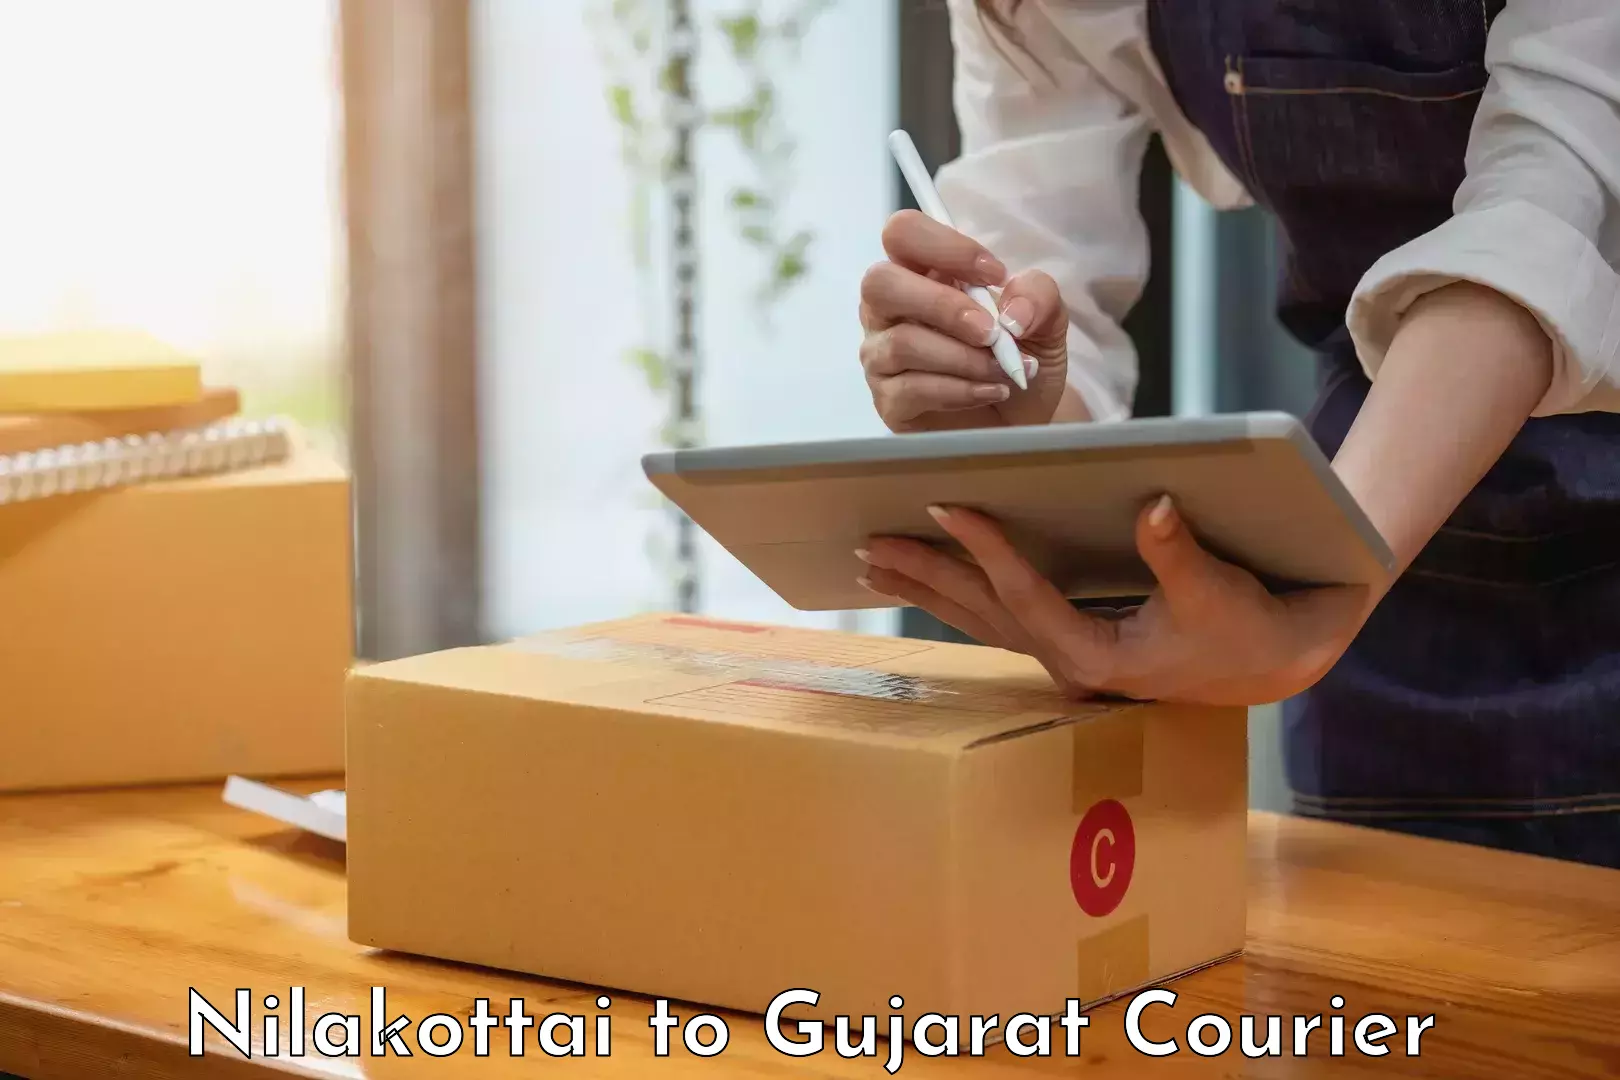 State-of-the-art courier technology Nilakottai to Patan